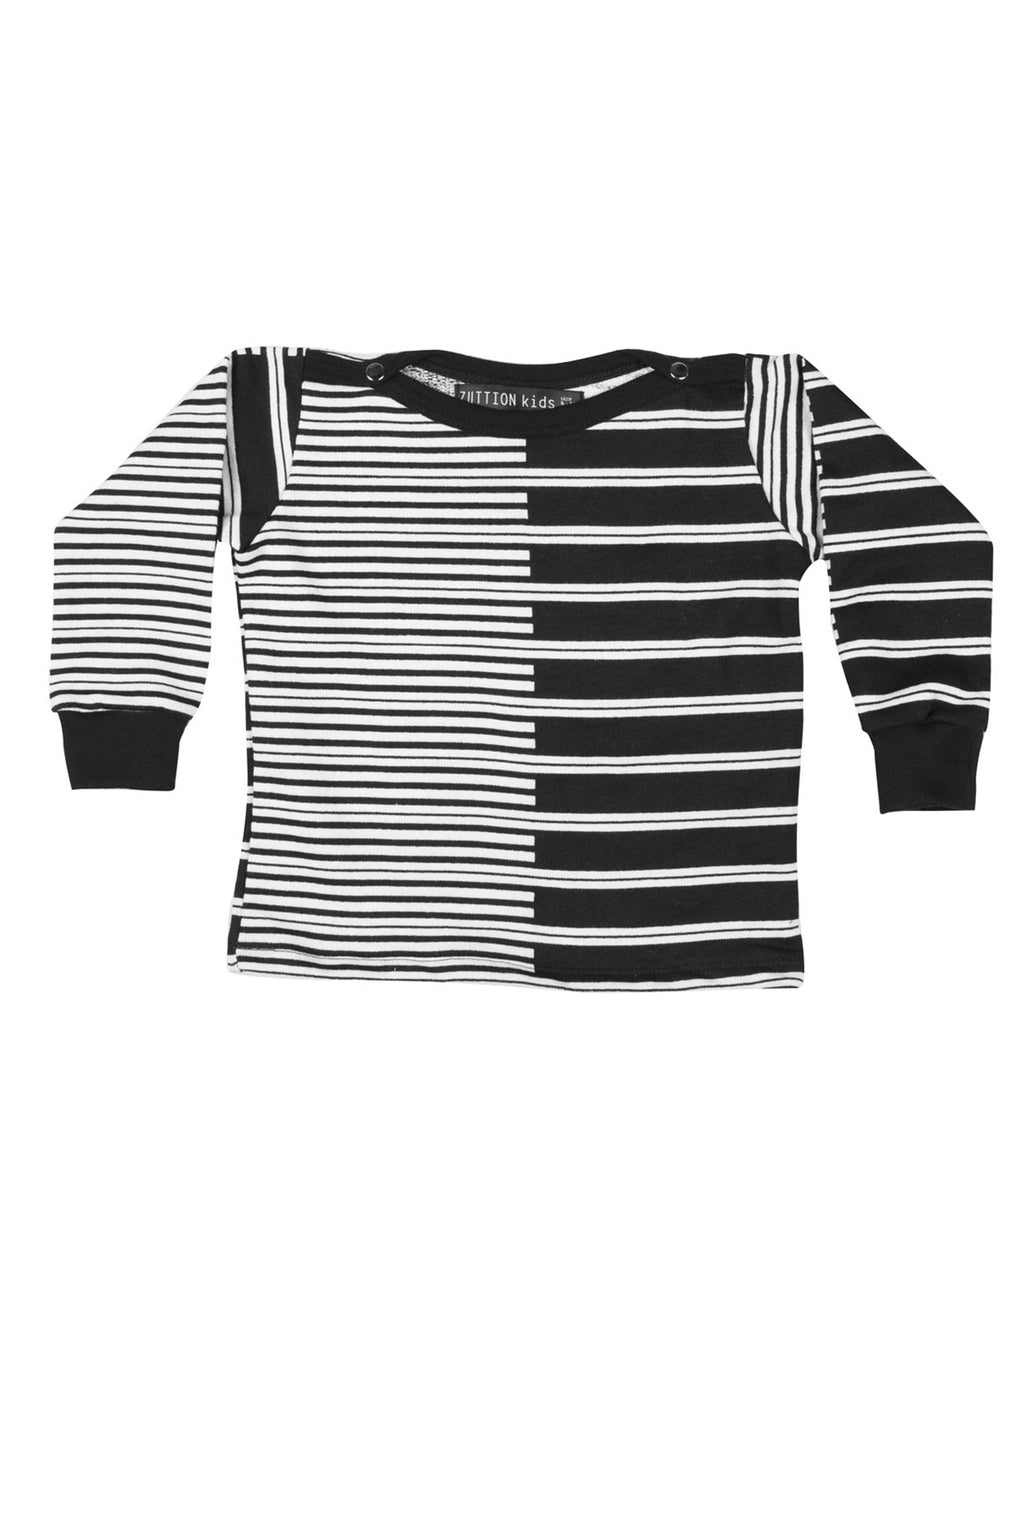 2 Stripes Baby Sweater White/Black - Zuttion